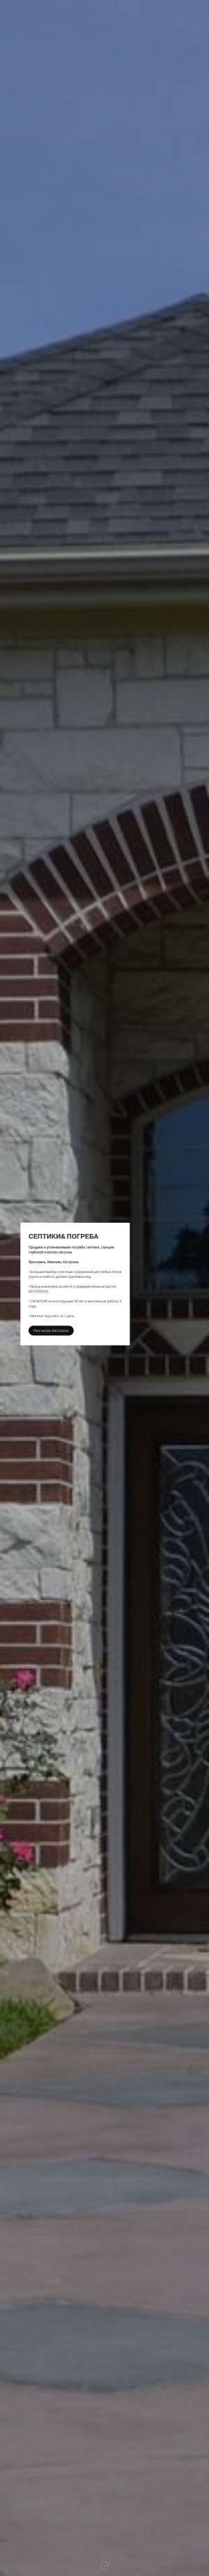 Предпросмотр для septikmonolit.ru — Септики&Погреба